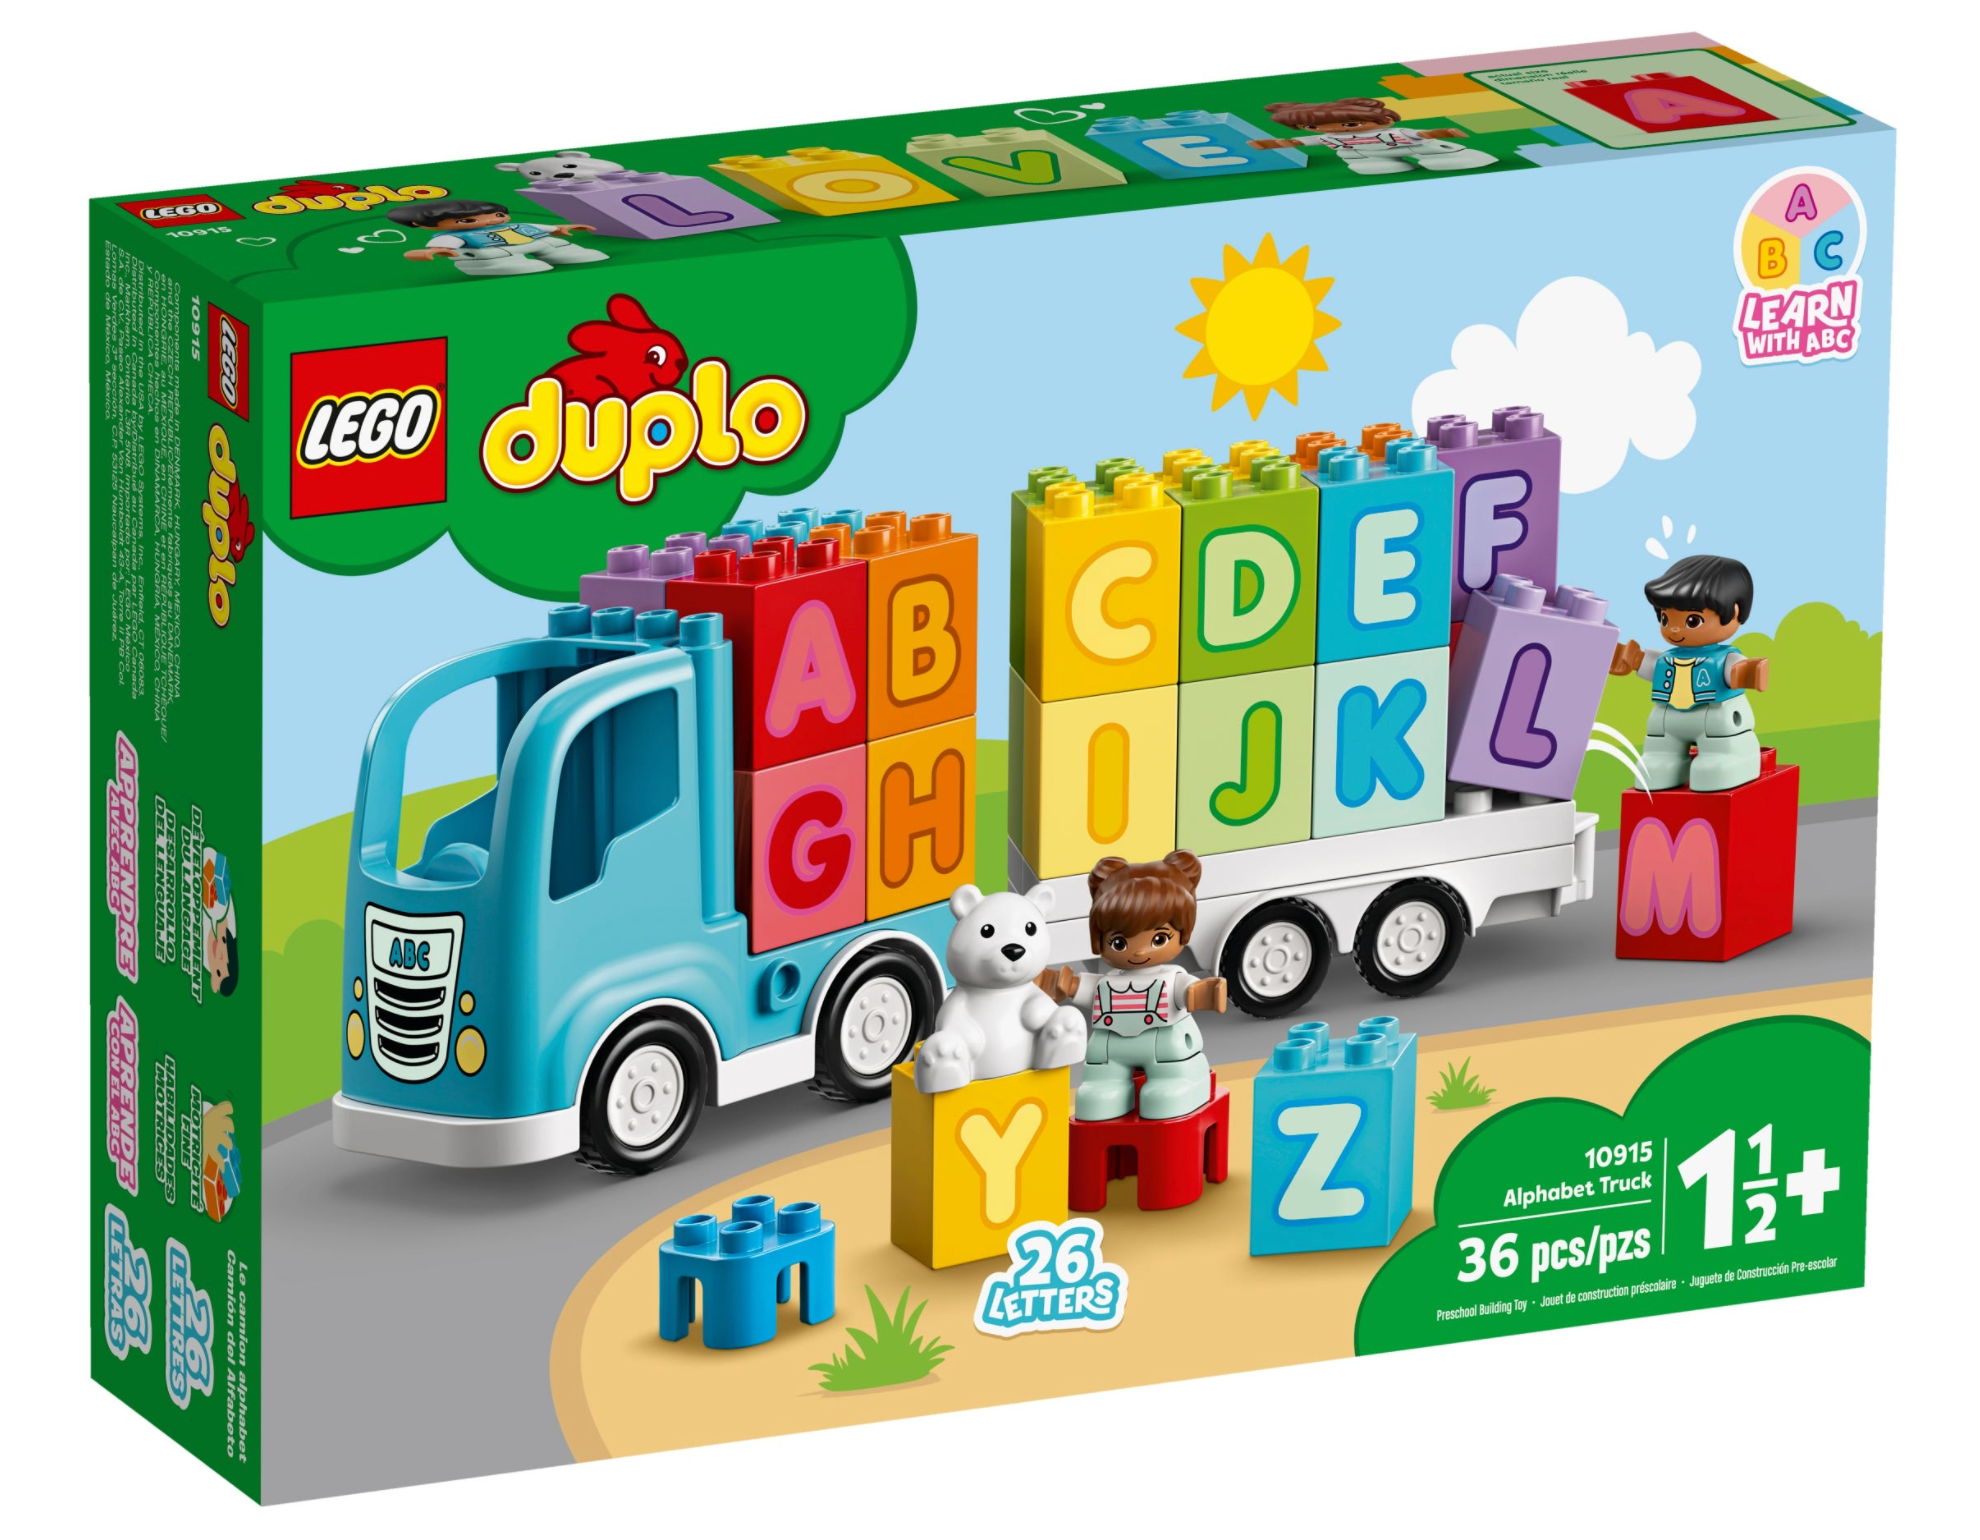 LEGO: DUPLO - Alphabet Truck